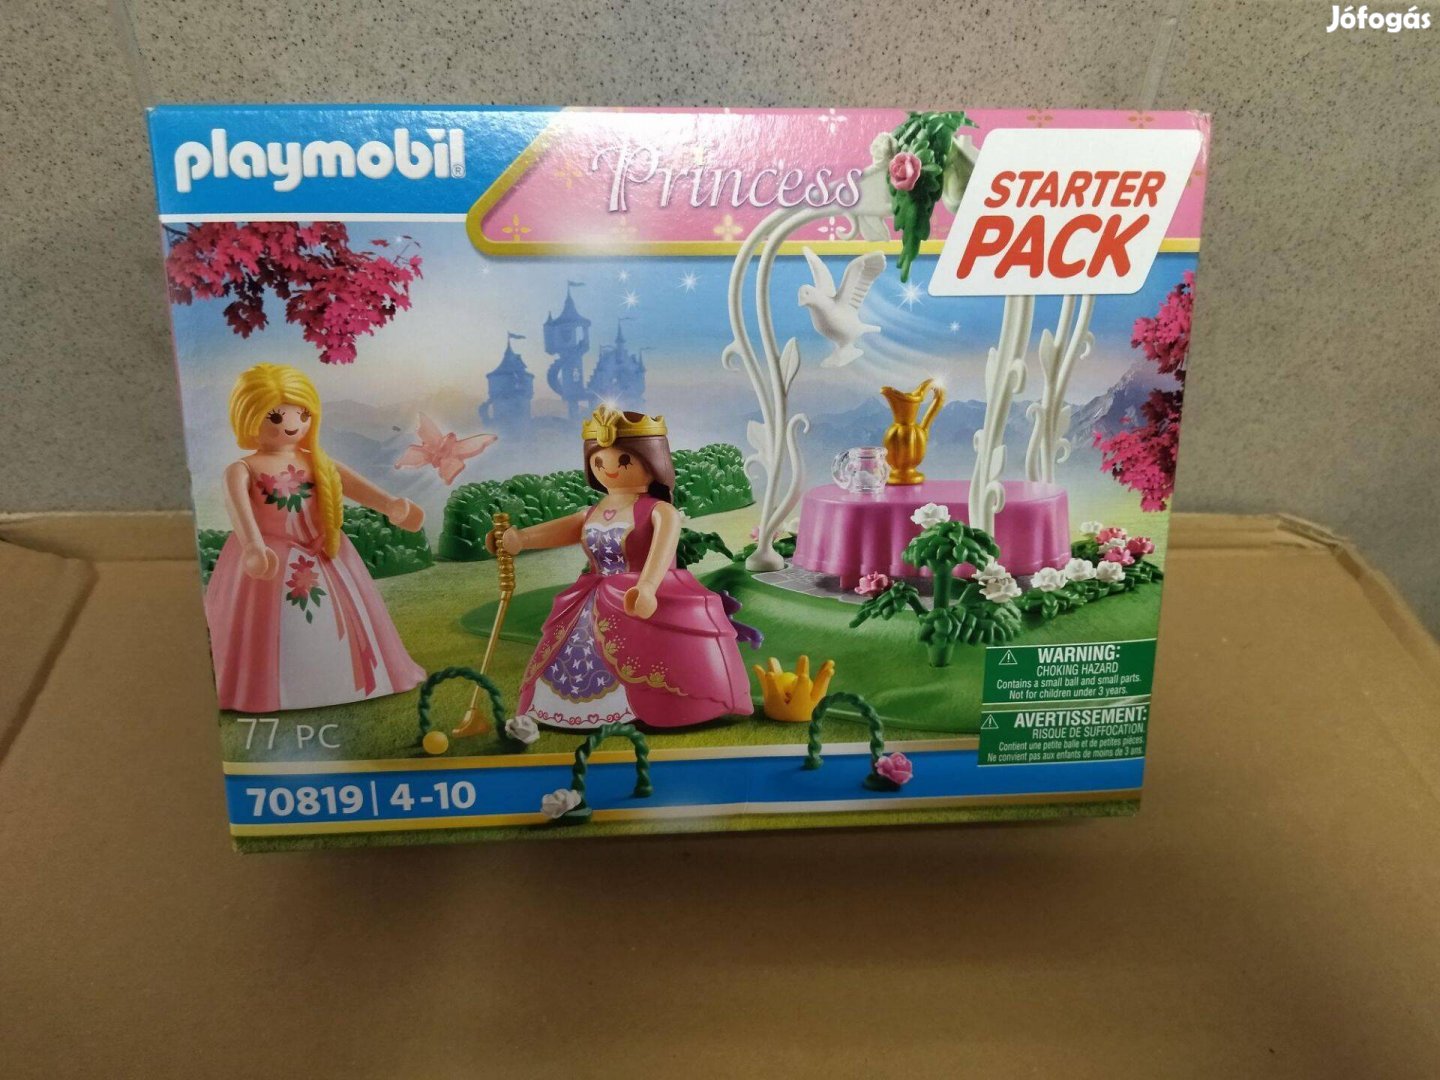 Playmobil Princess 70819 A hercegnő kertje új, bontatlan